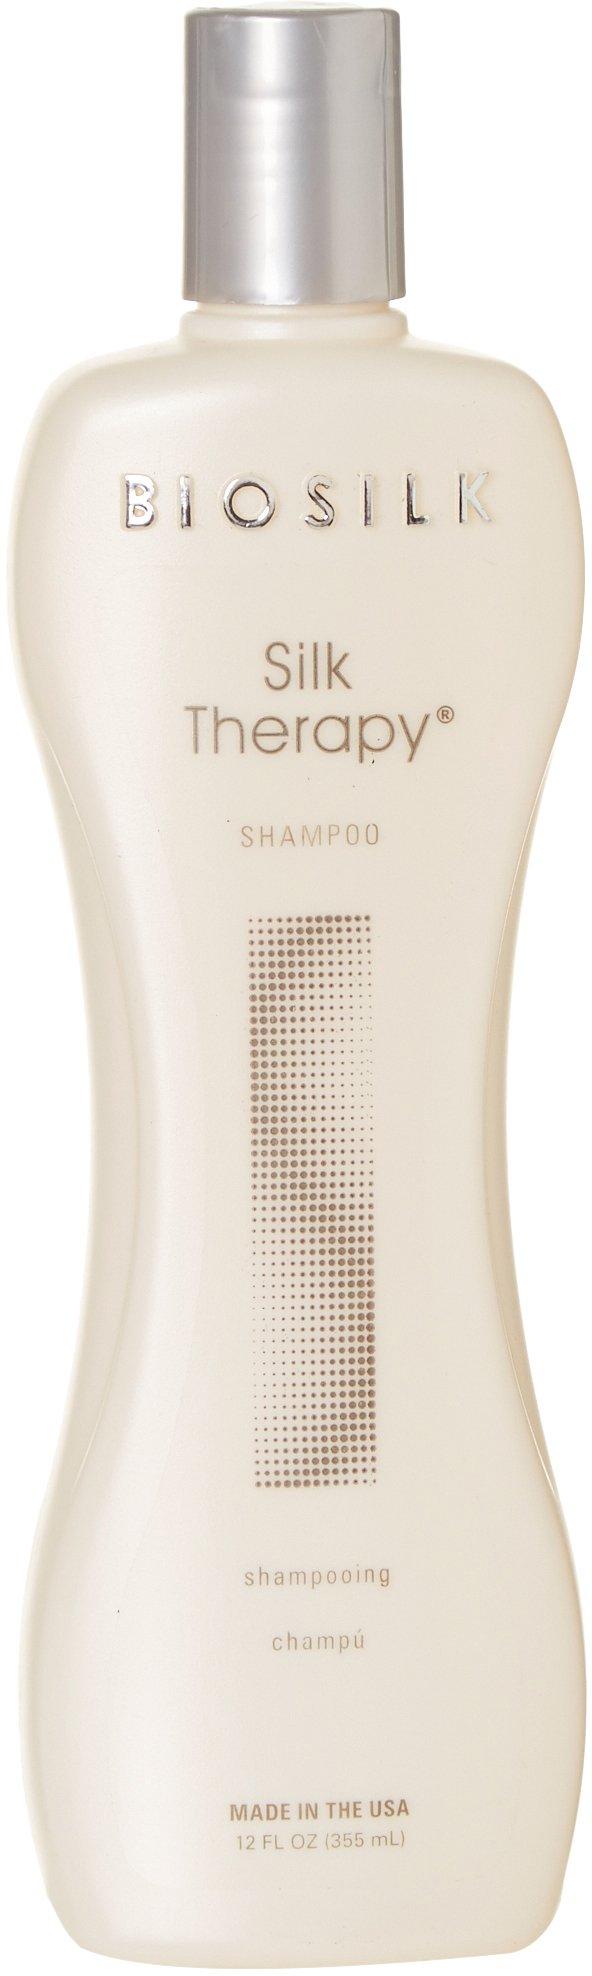 Silk Therapy 12 fl. oz. Shampoo